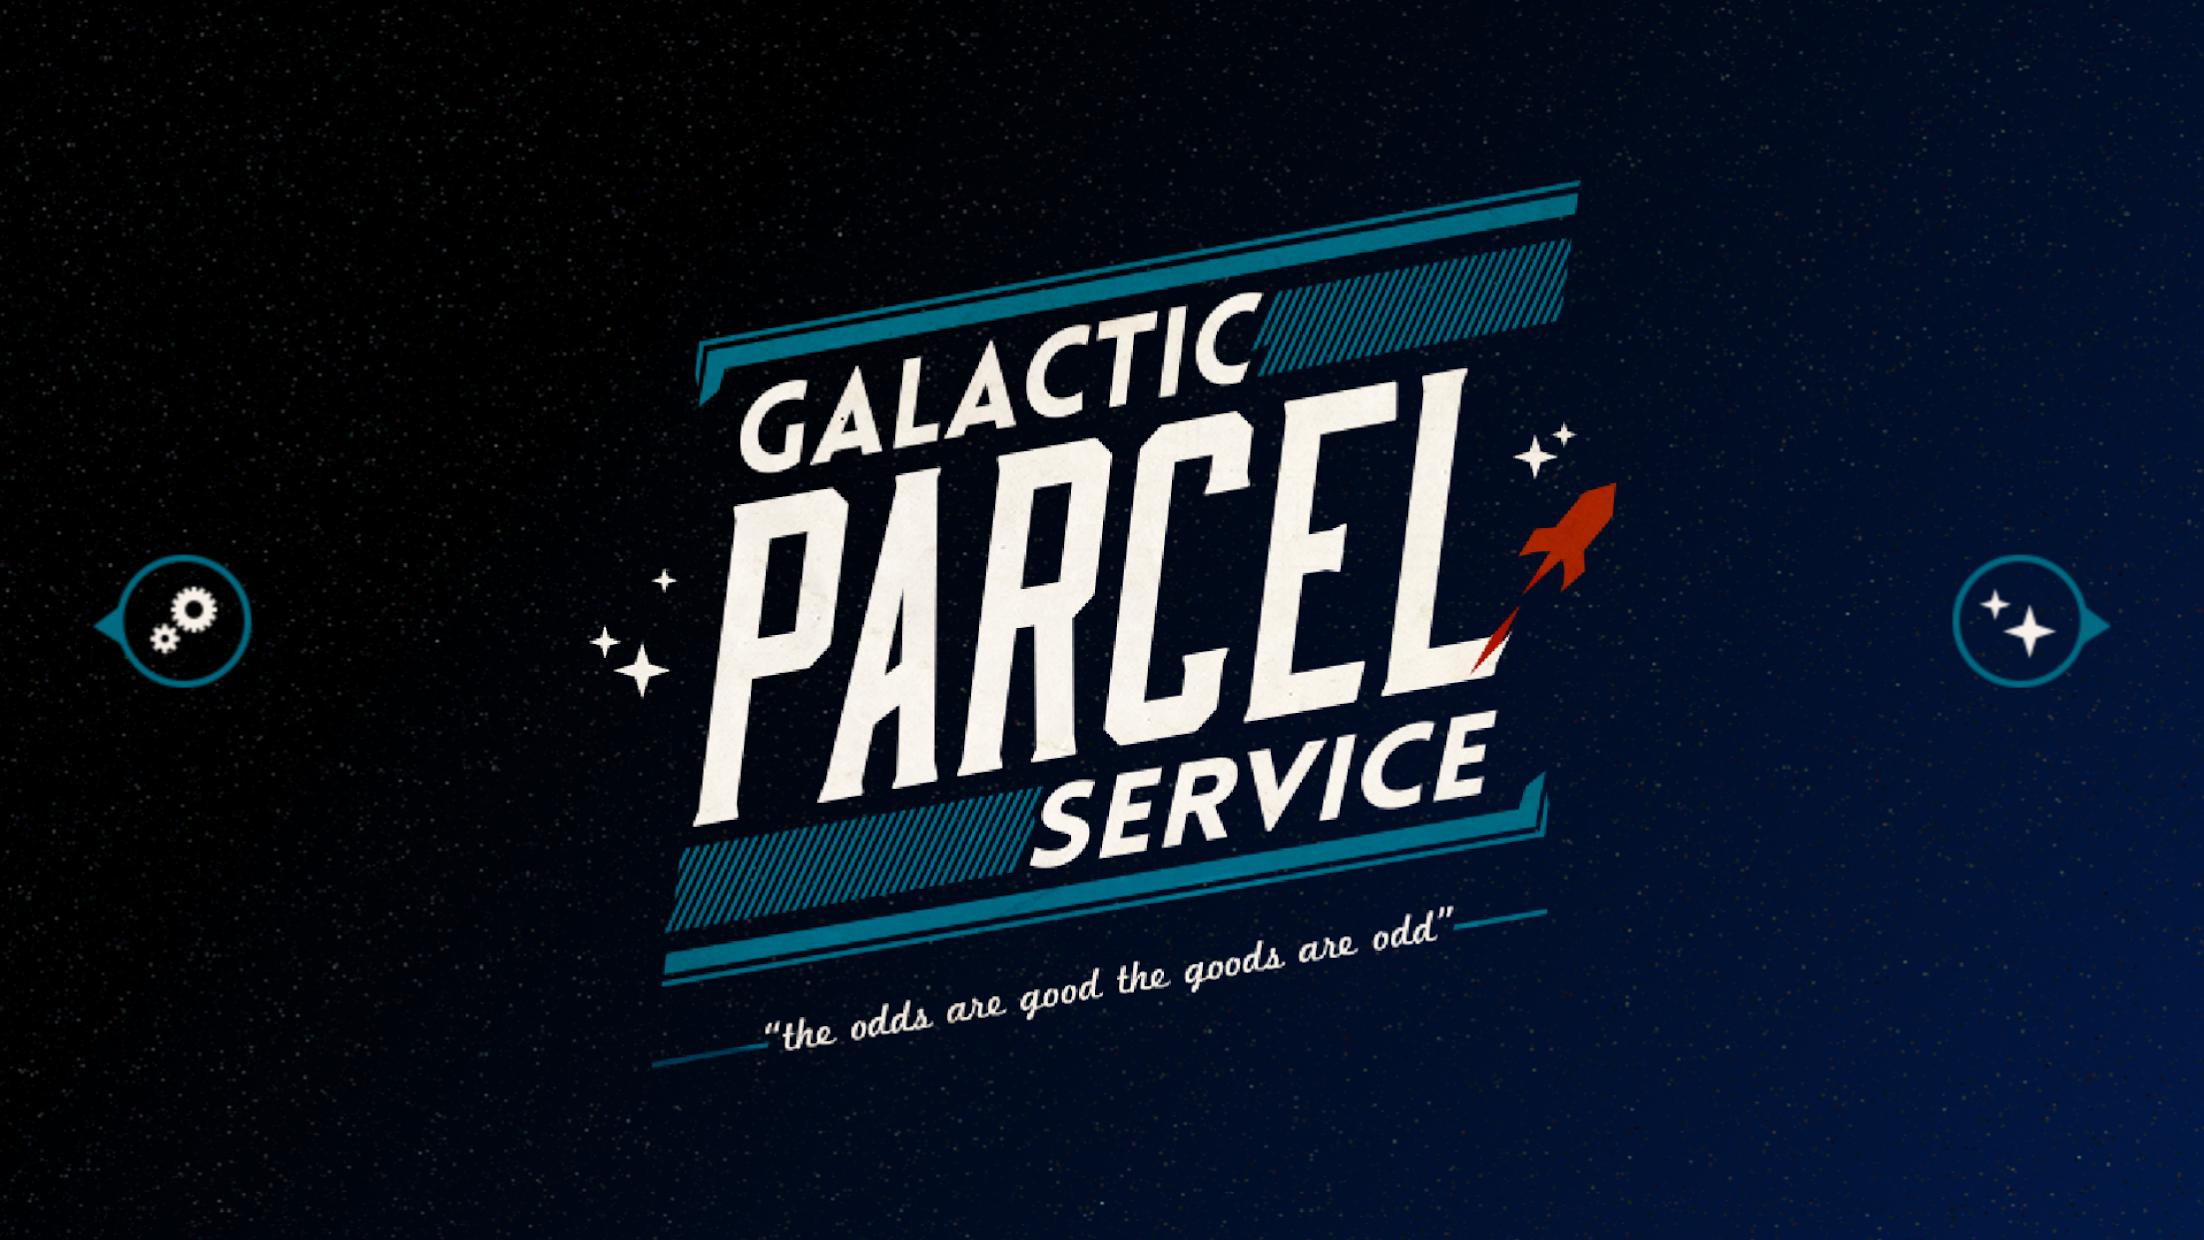 Galactic Parcel Service